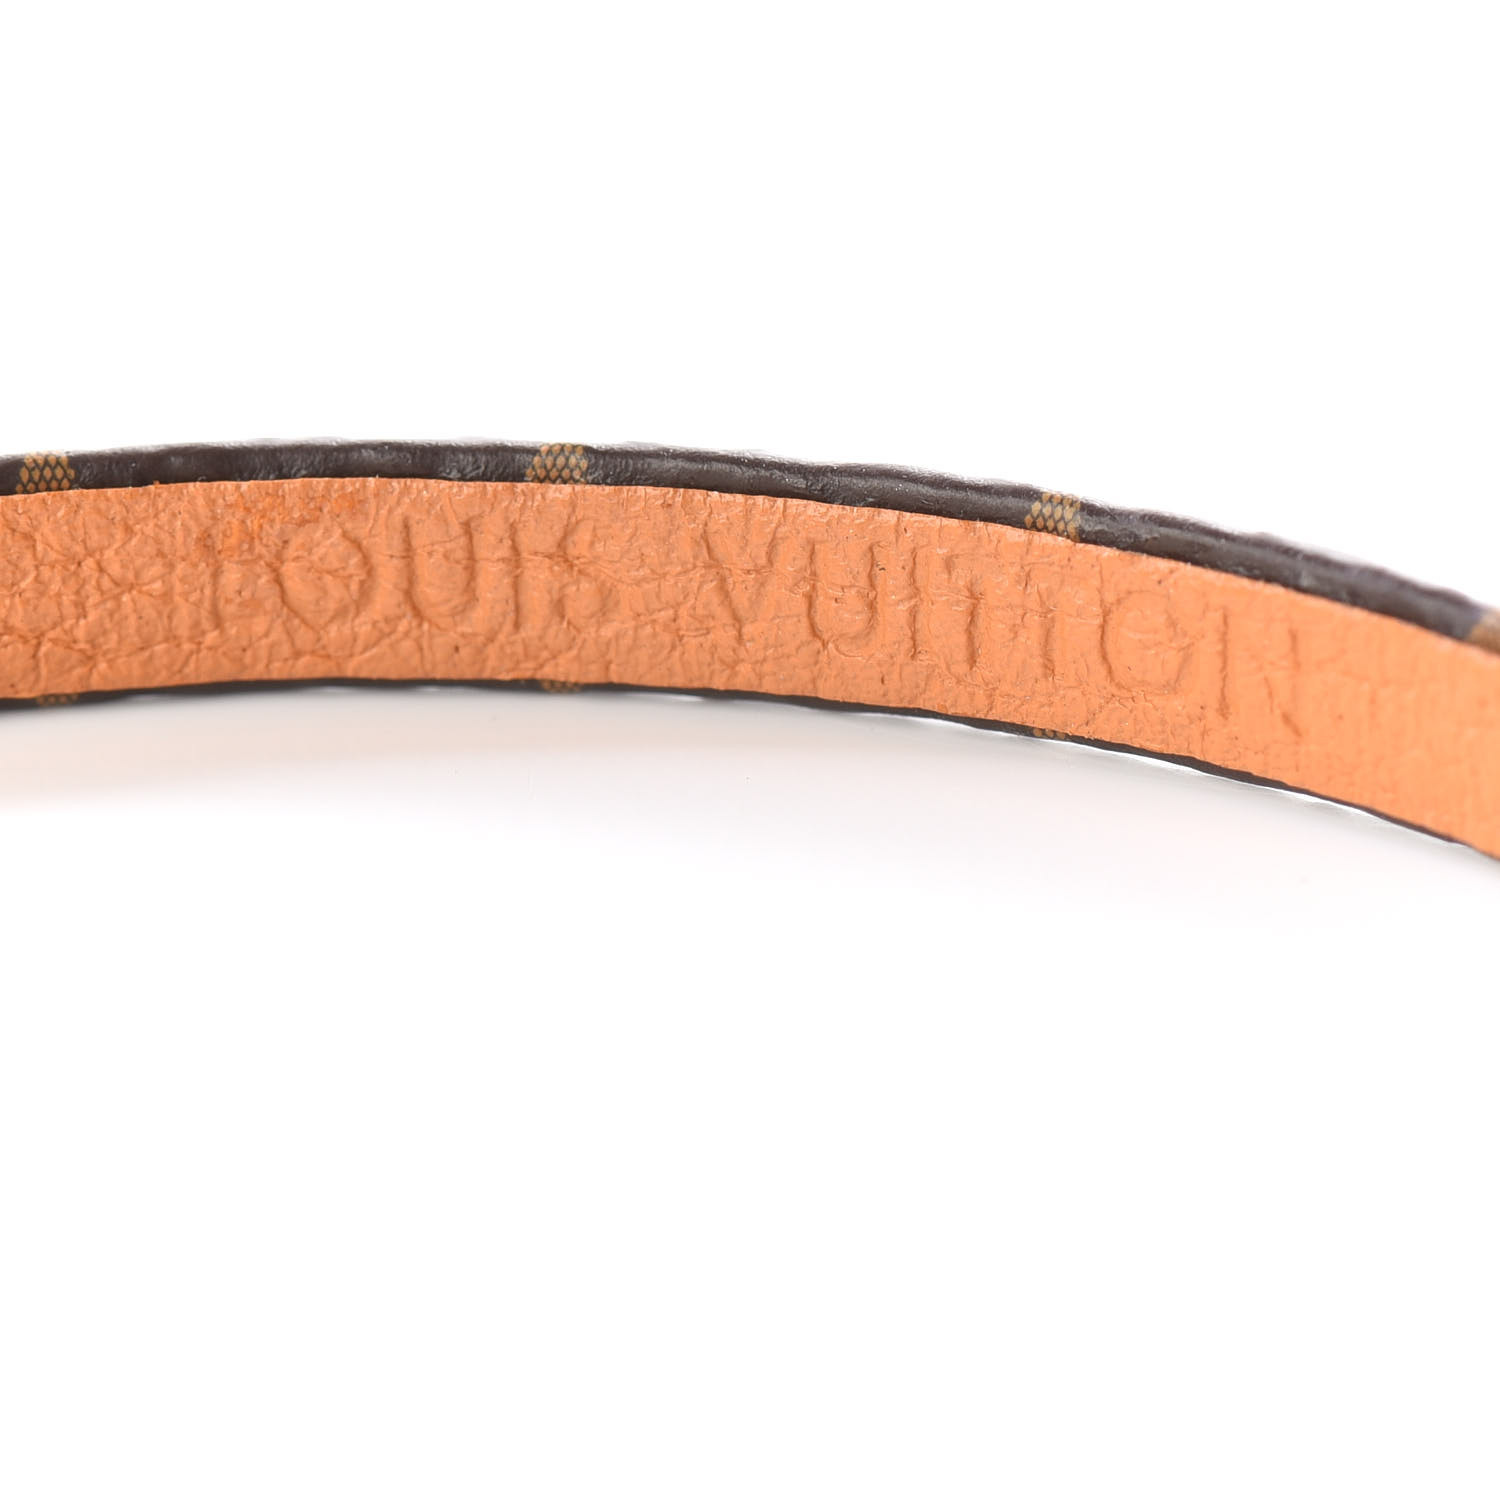 Louis Vuitton MONOGRAM Historic mini monogram bracelet (M6407F, M6407E)